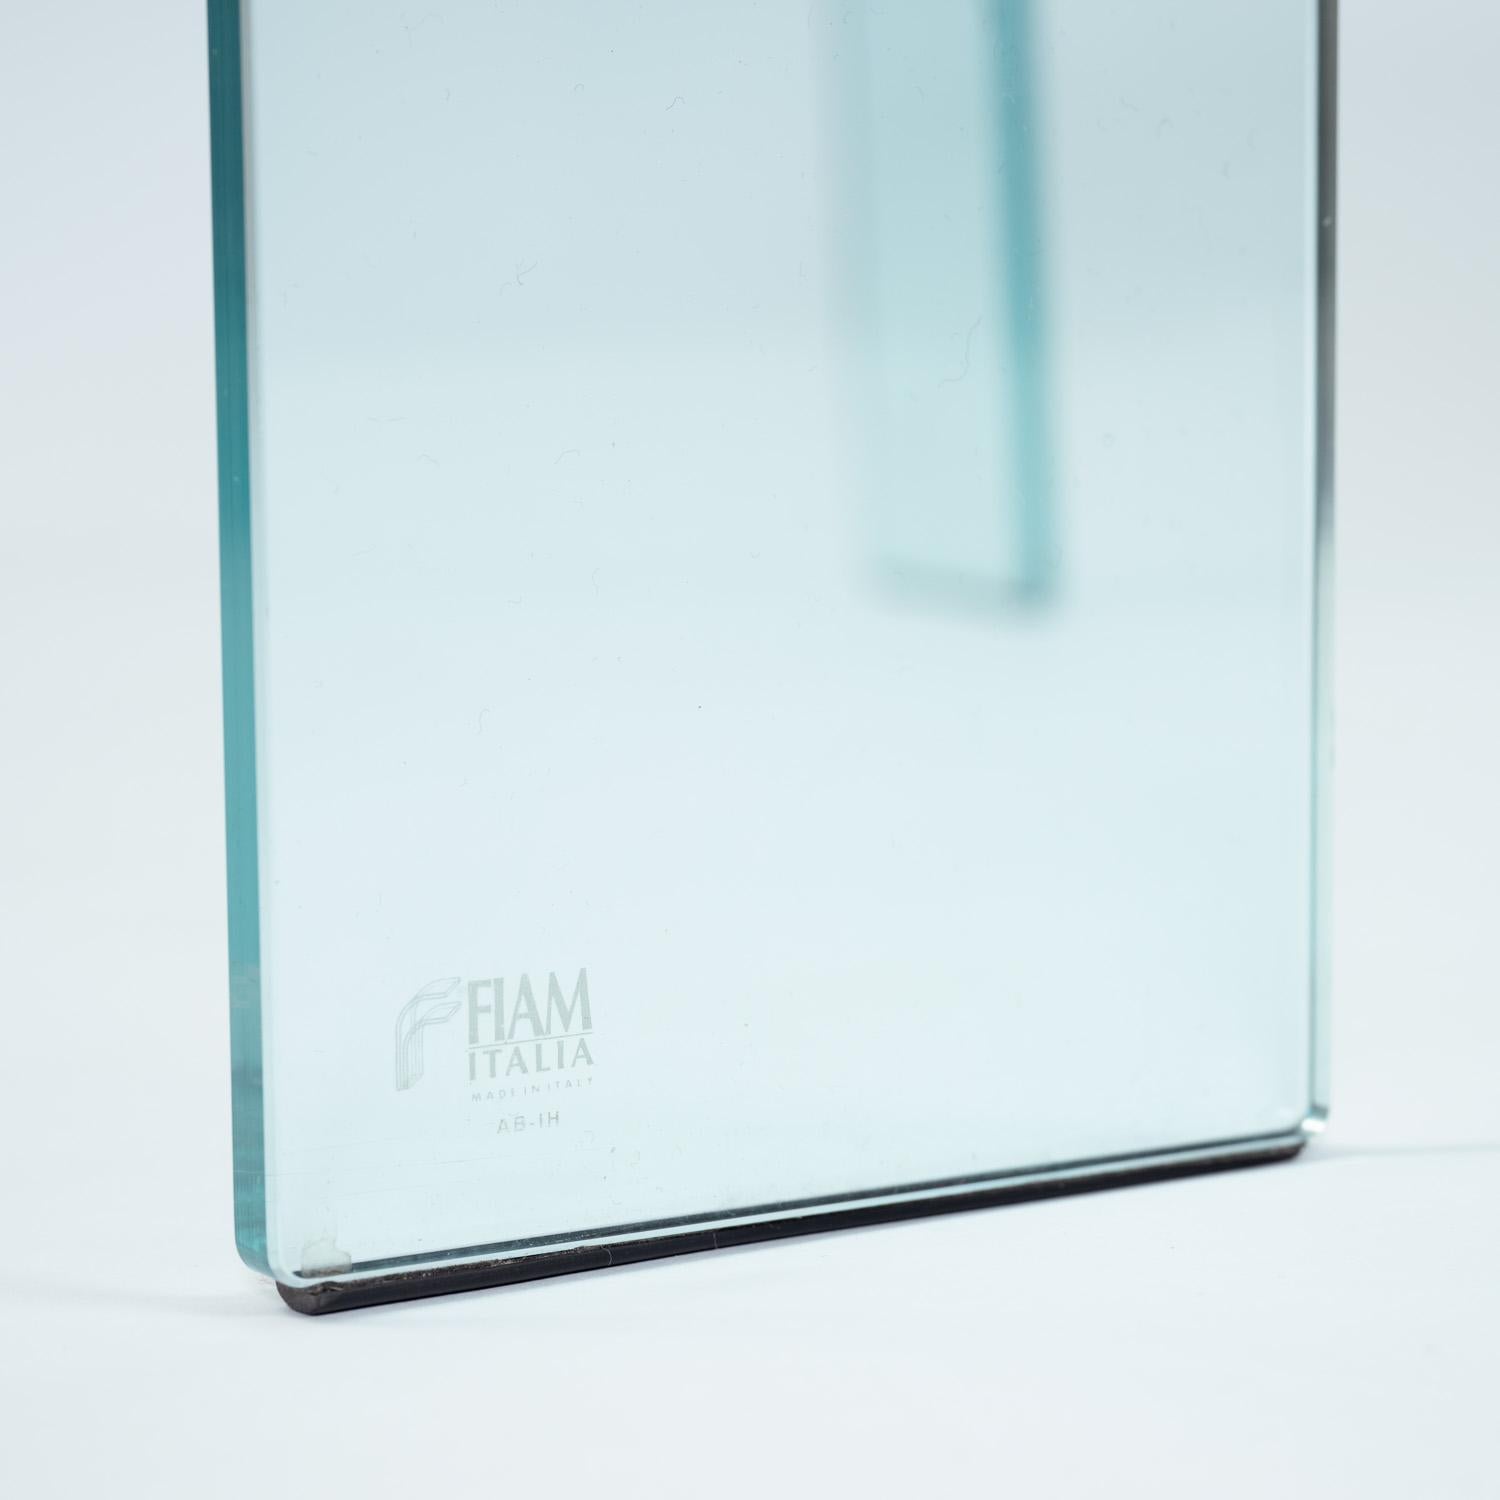 Italian Fiam bended glass Coffeetable by Hans Von Klier 1